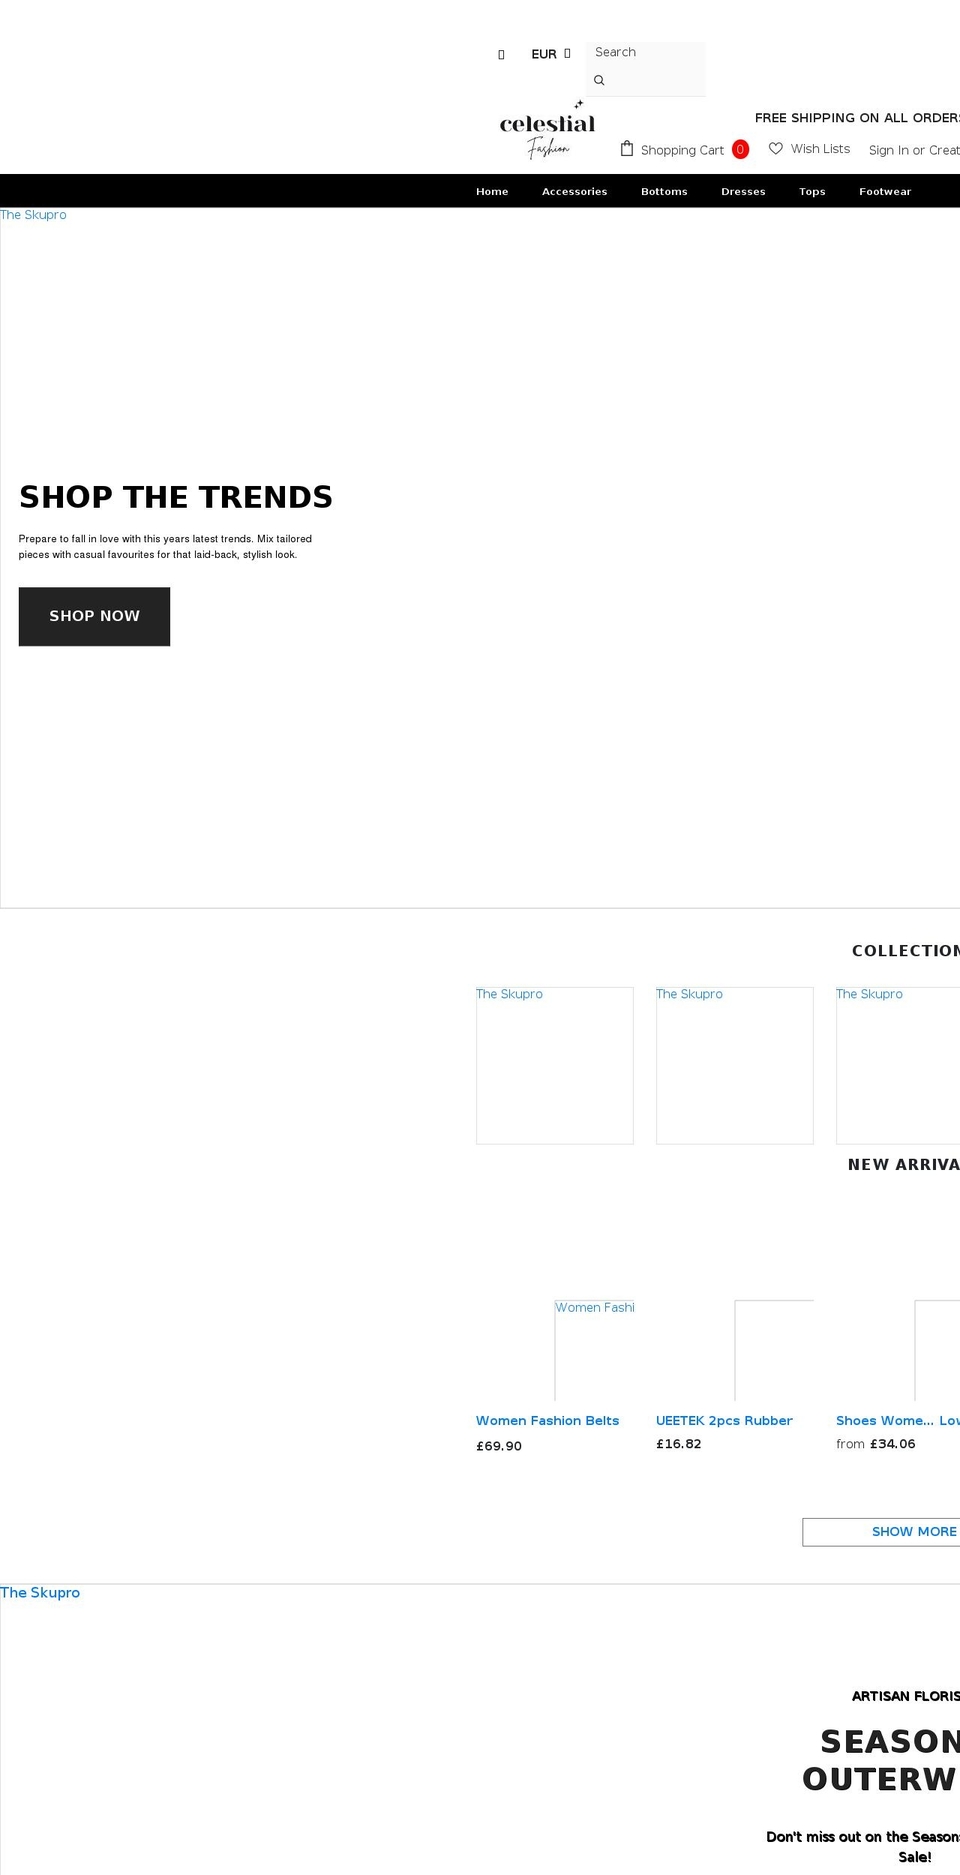 theskupro.com shopify website screenshot